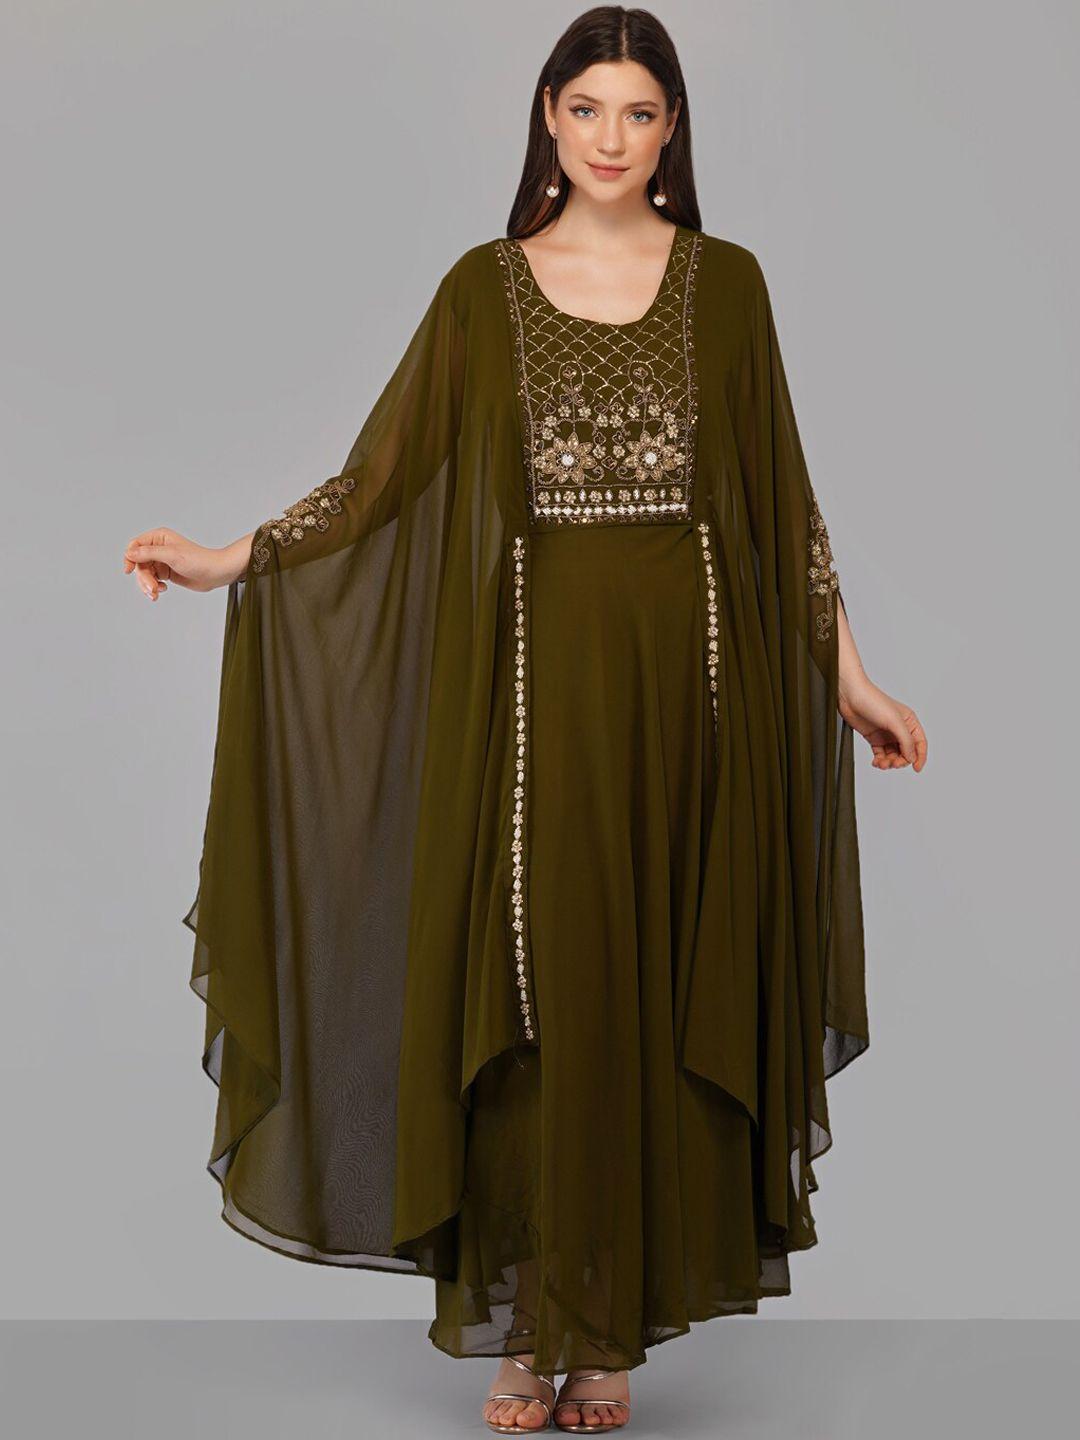 ziva-fashion-women-olive-green-embellished-flared-sleeves-georgette-maxi-dress